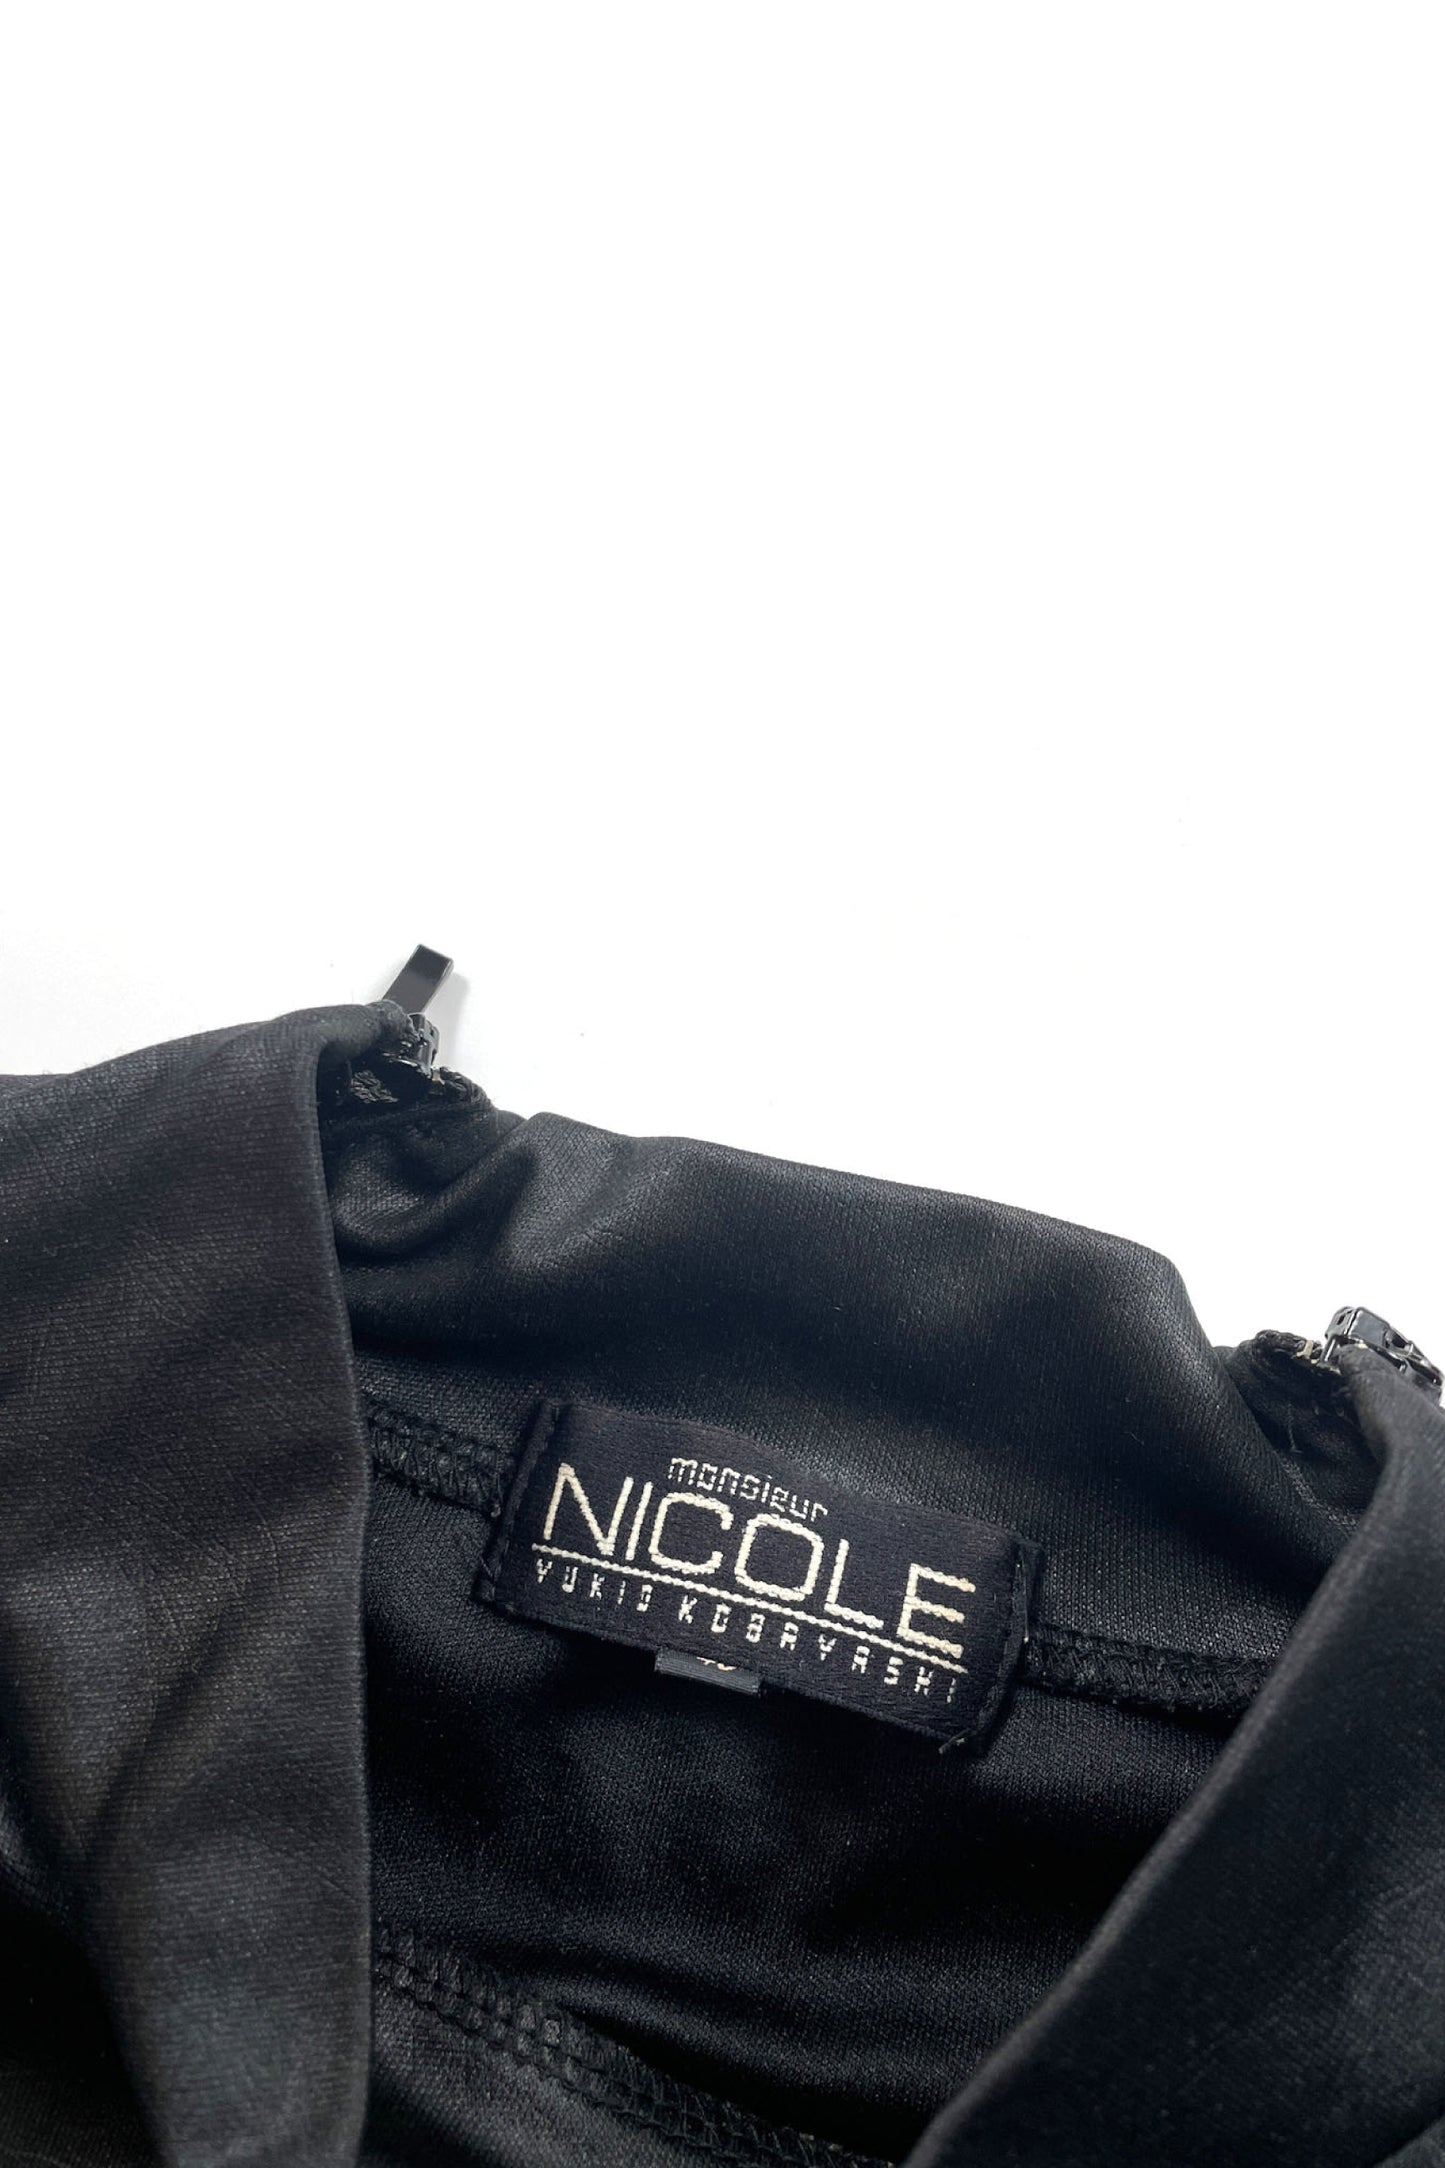 90's NICOLE blouse